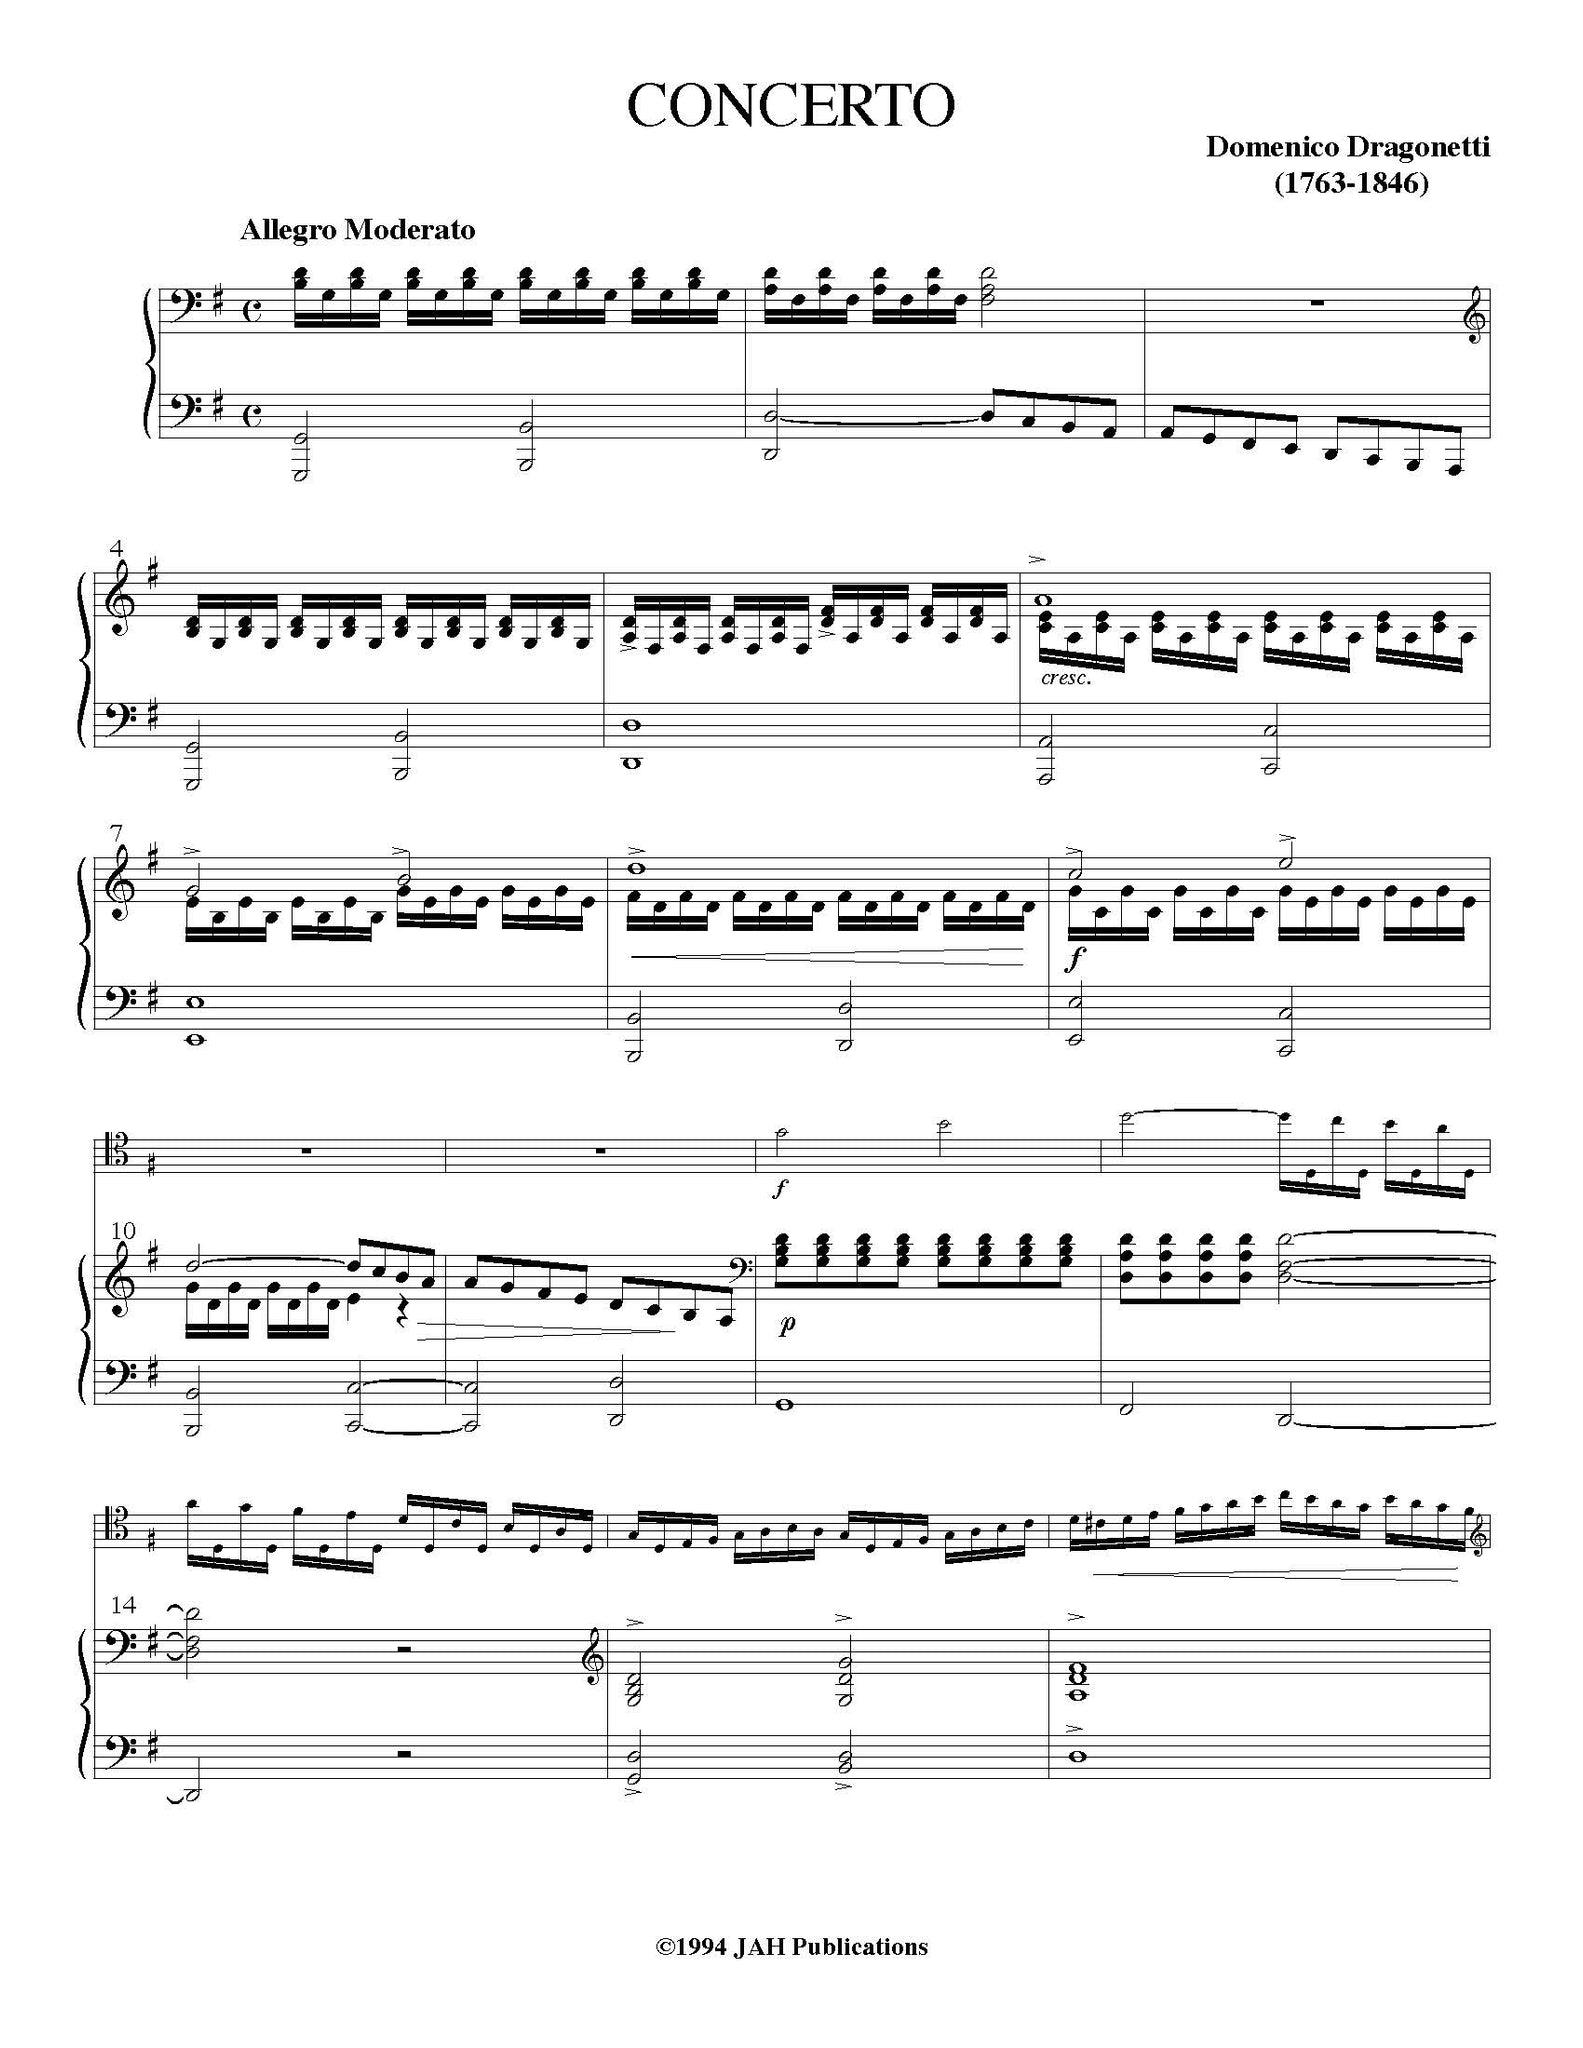 Dragonetti Concerto orchestra tuning page 1